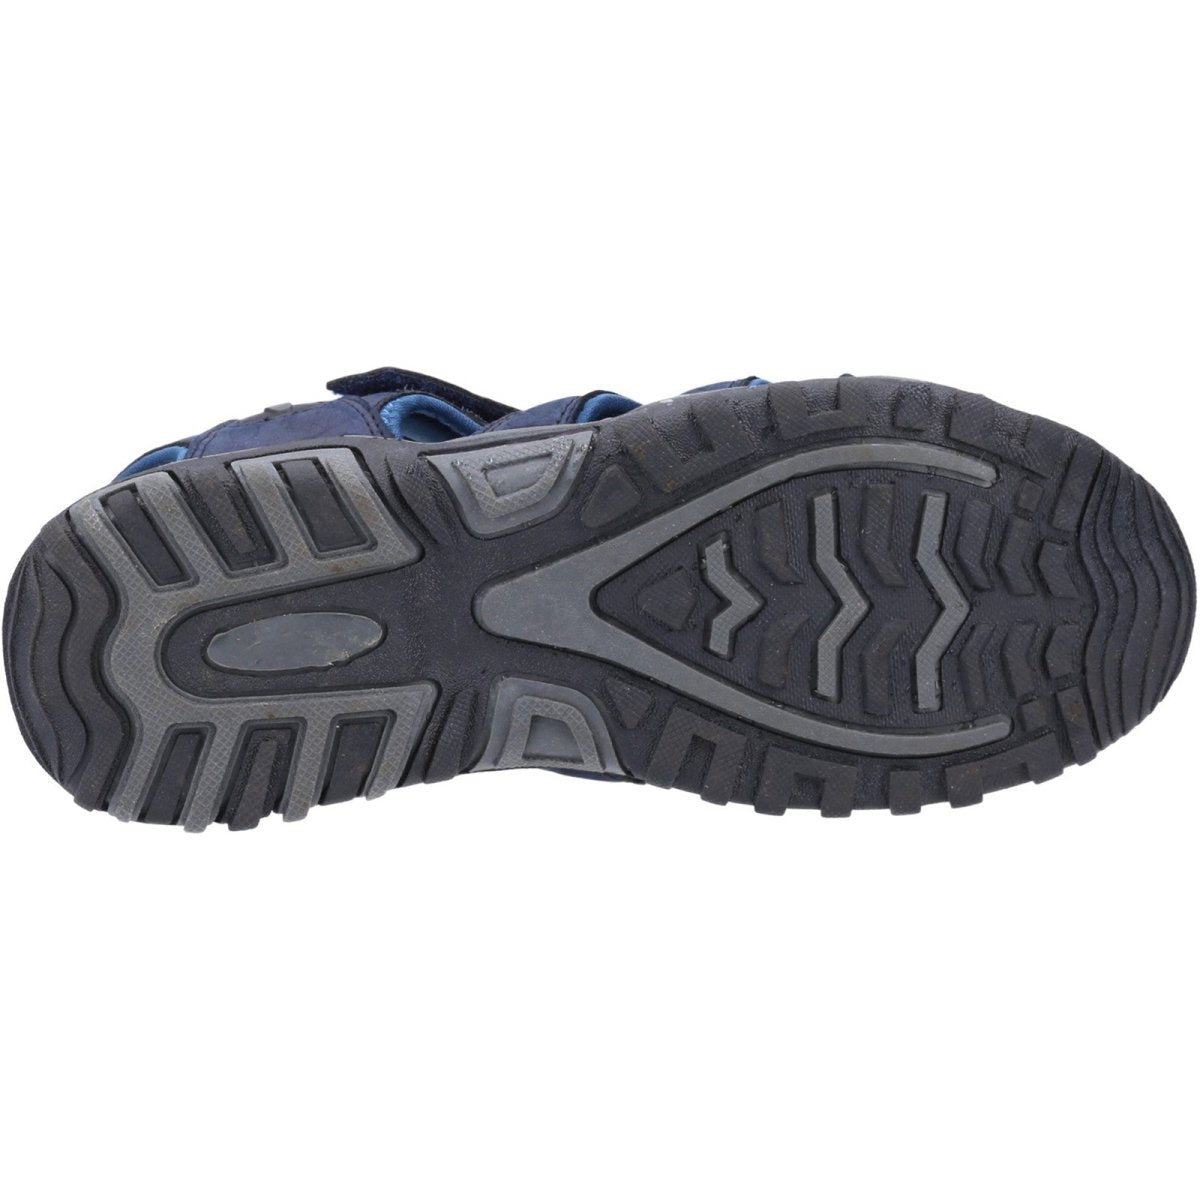 Cotswold Colesbourne Ladies Summer Walking Sandals - Shoe Store Direct